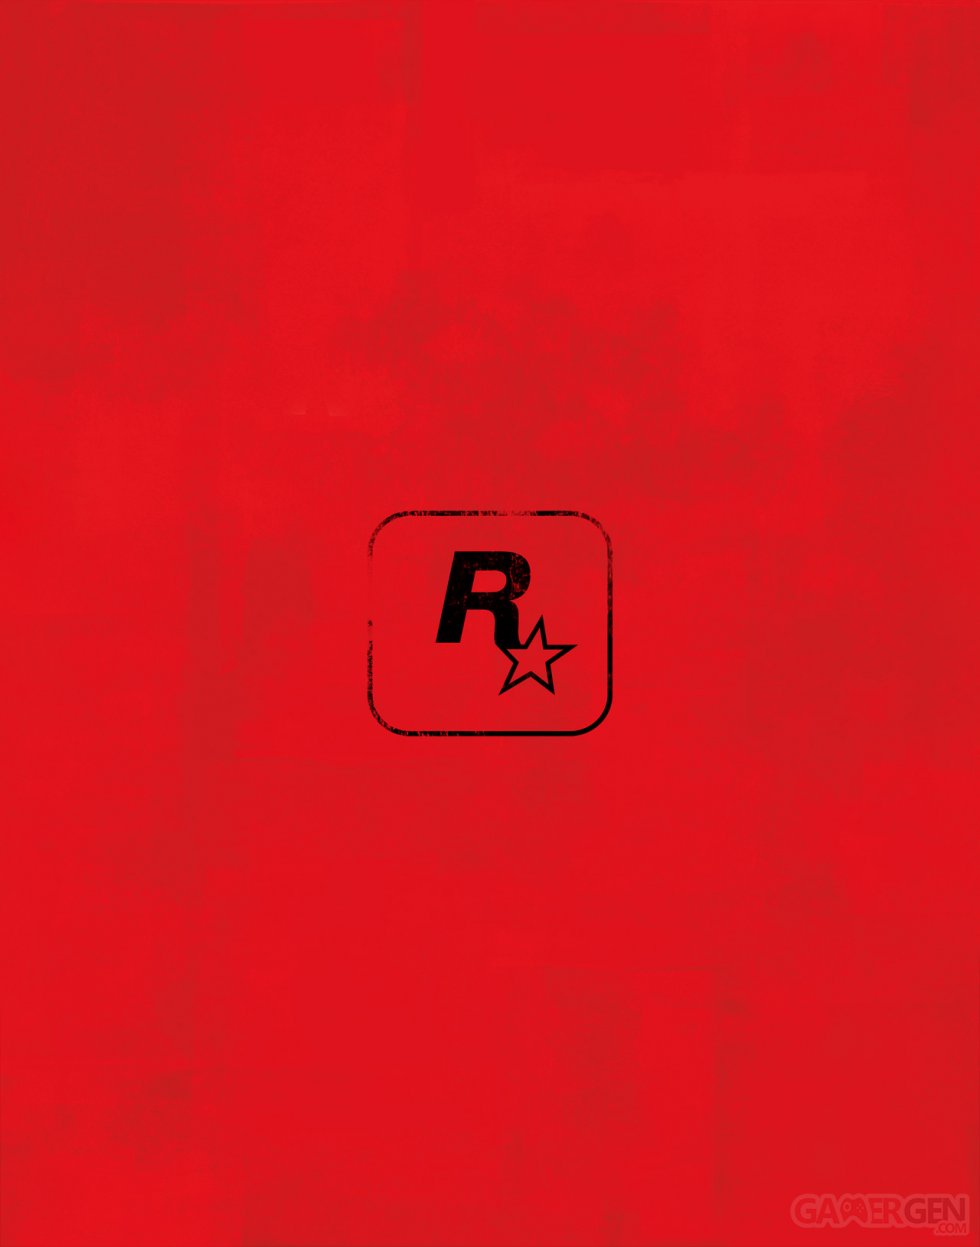 Rockstar-Games-teasing-Red-Dead-16-10-2016